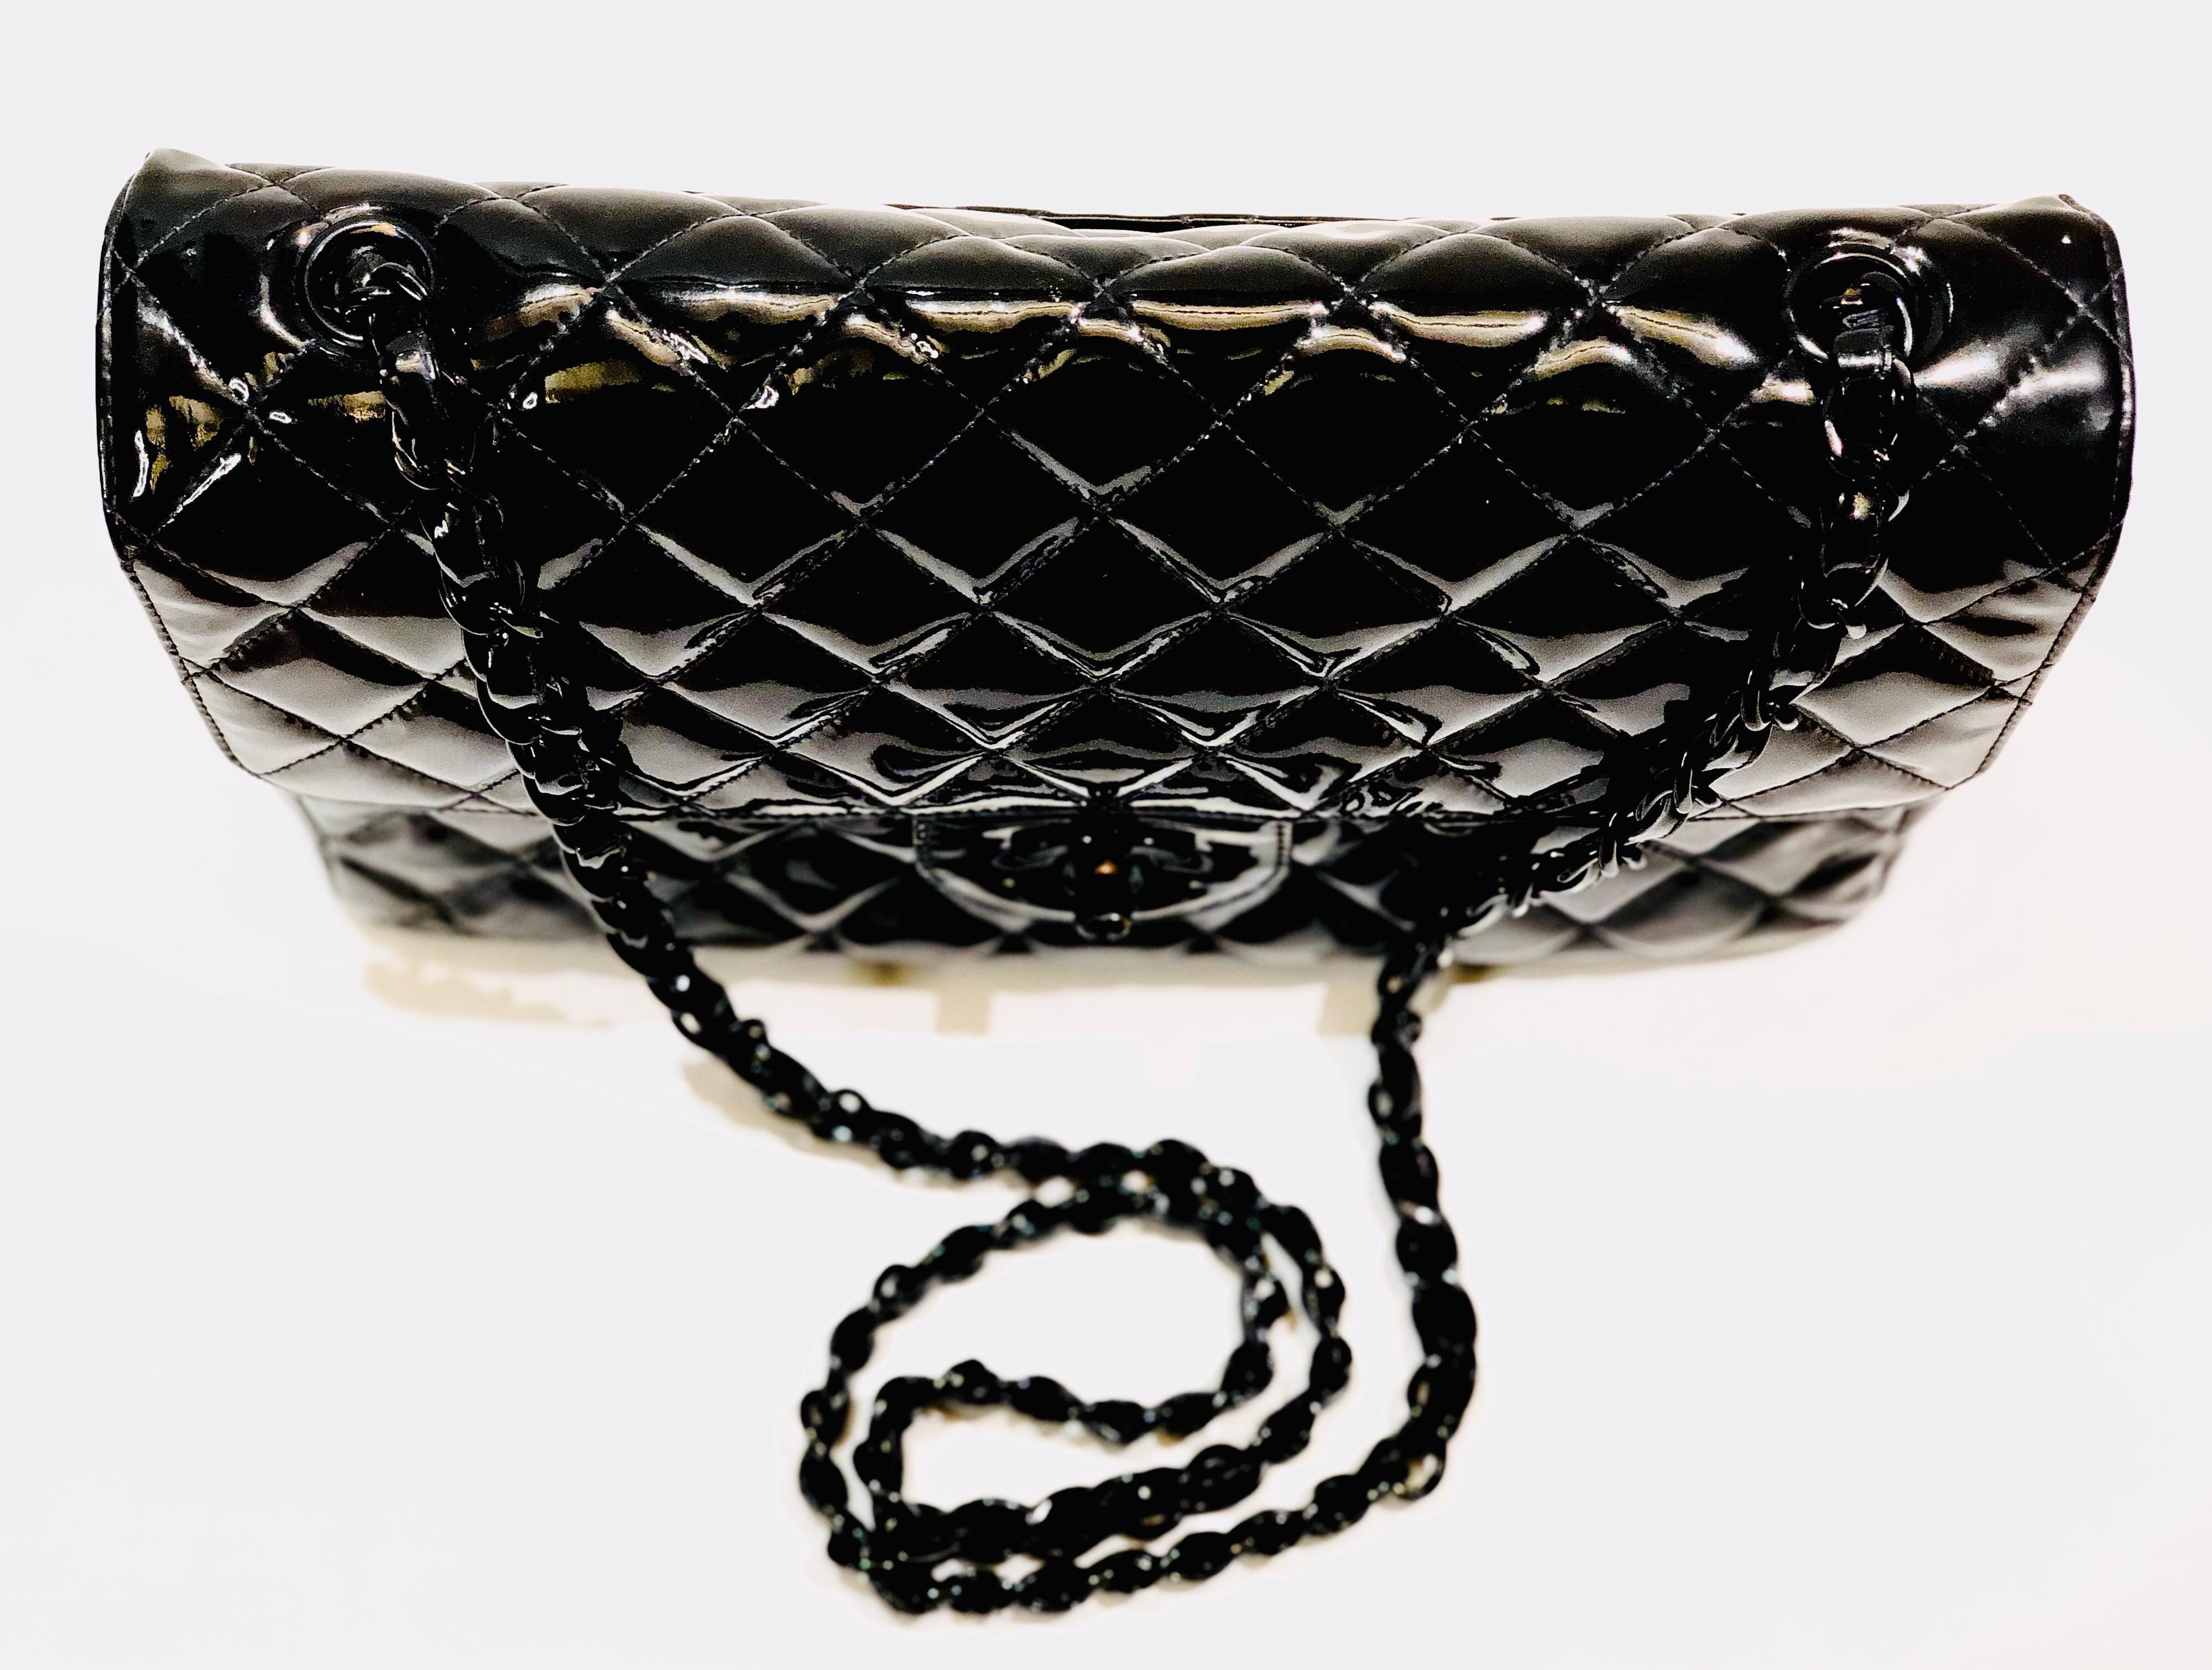 black patent leather bag sale